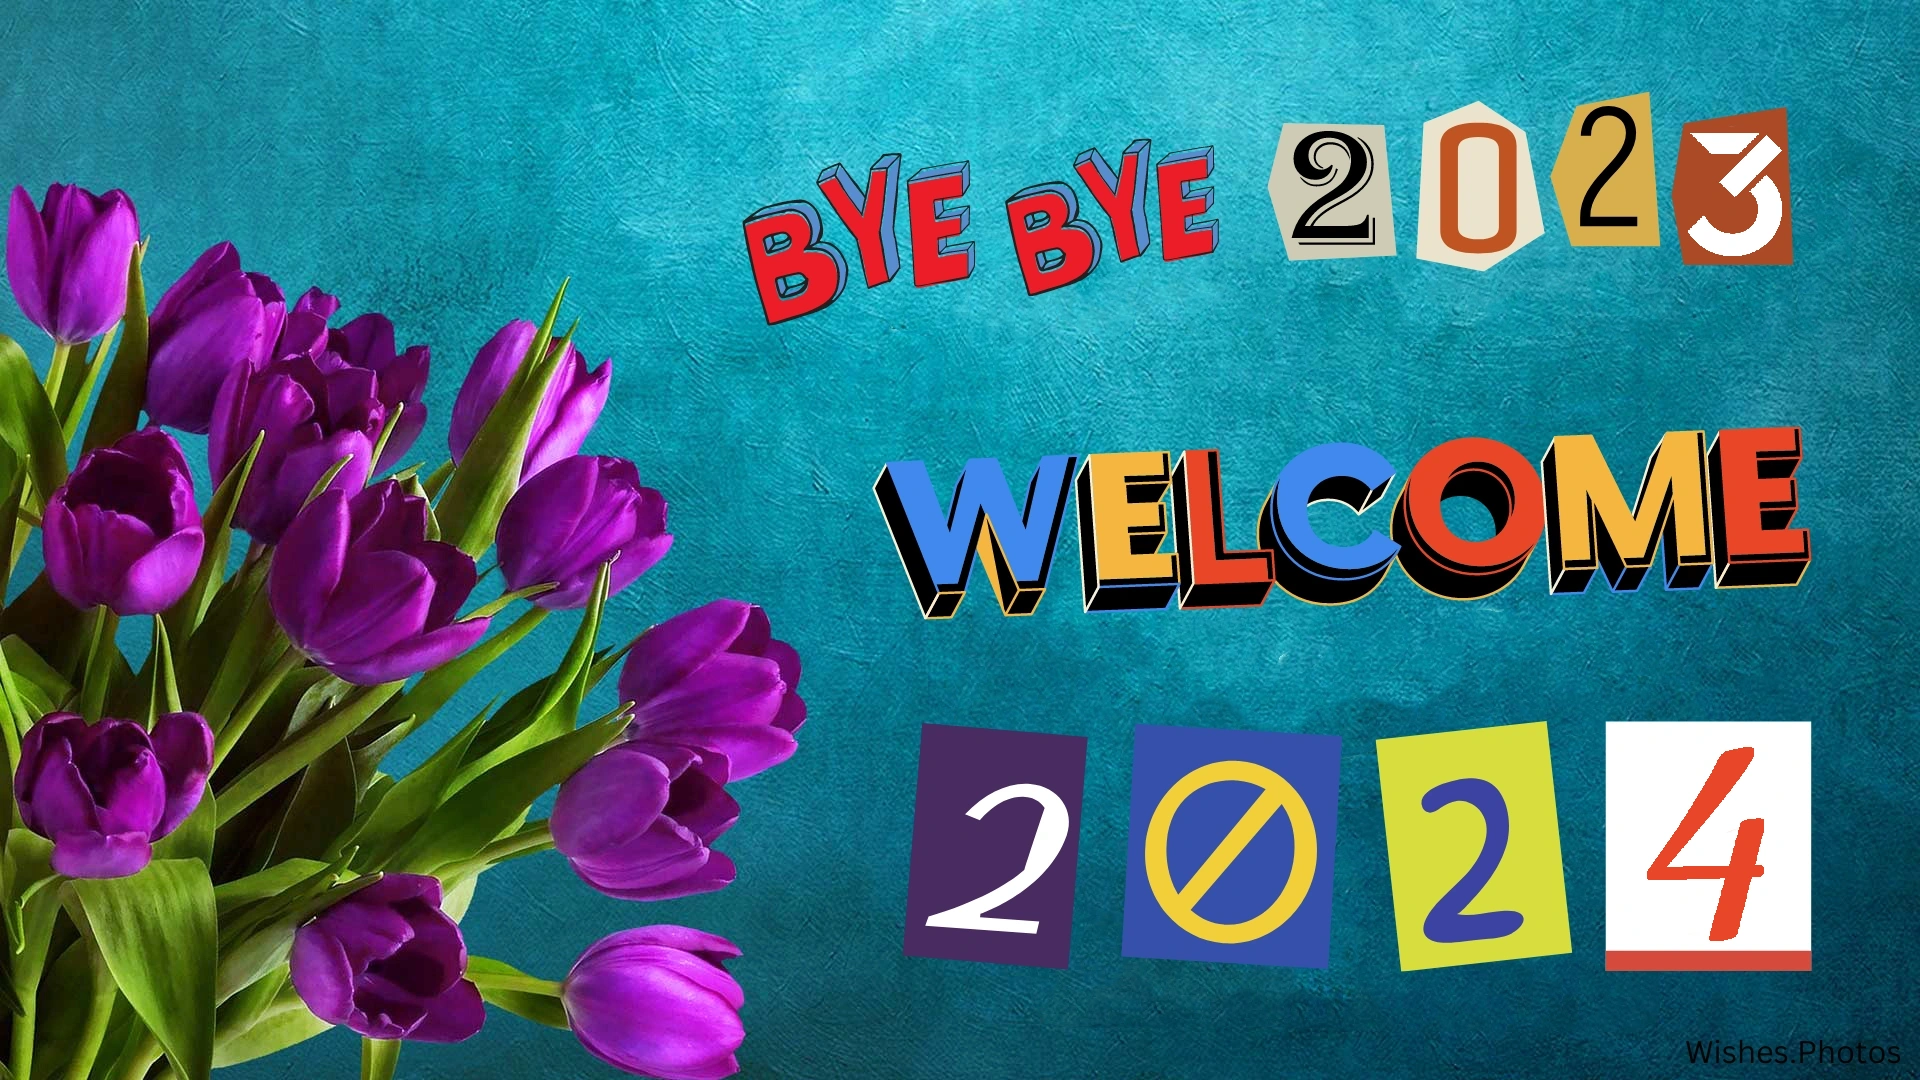 Bye Bye 2022 Welcome 2022 Wallpaper Background 700x394.jpg